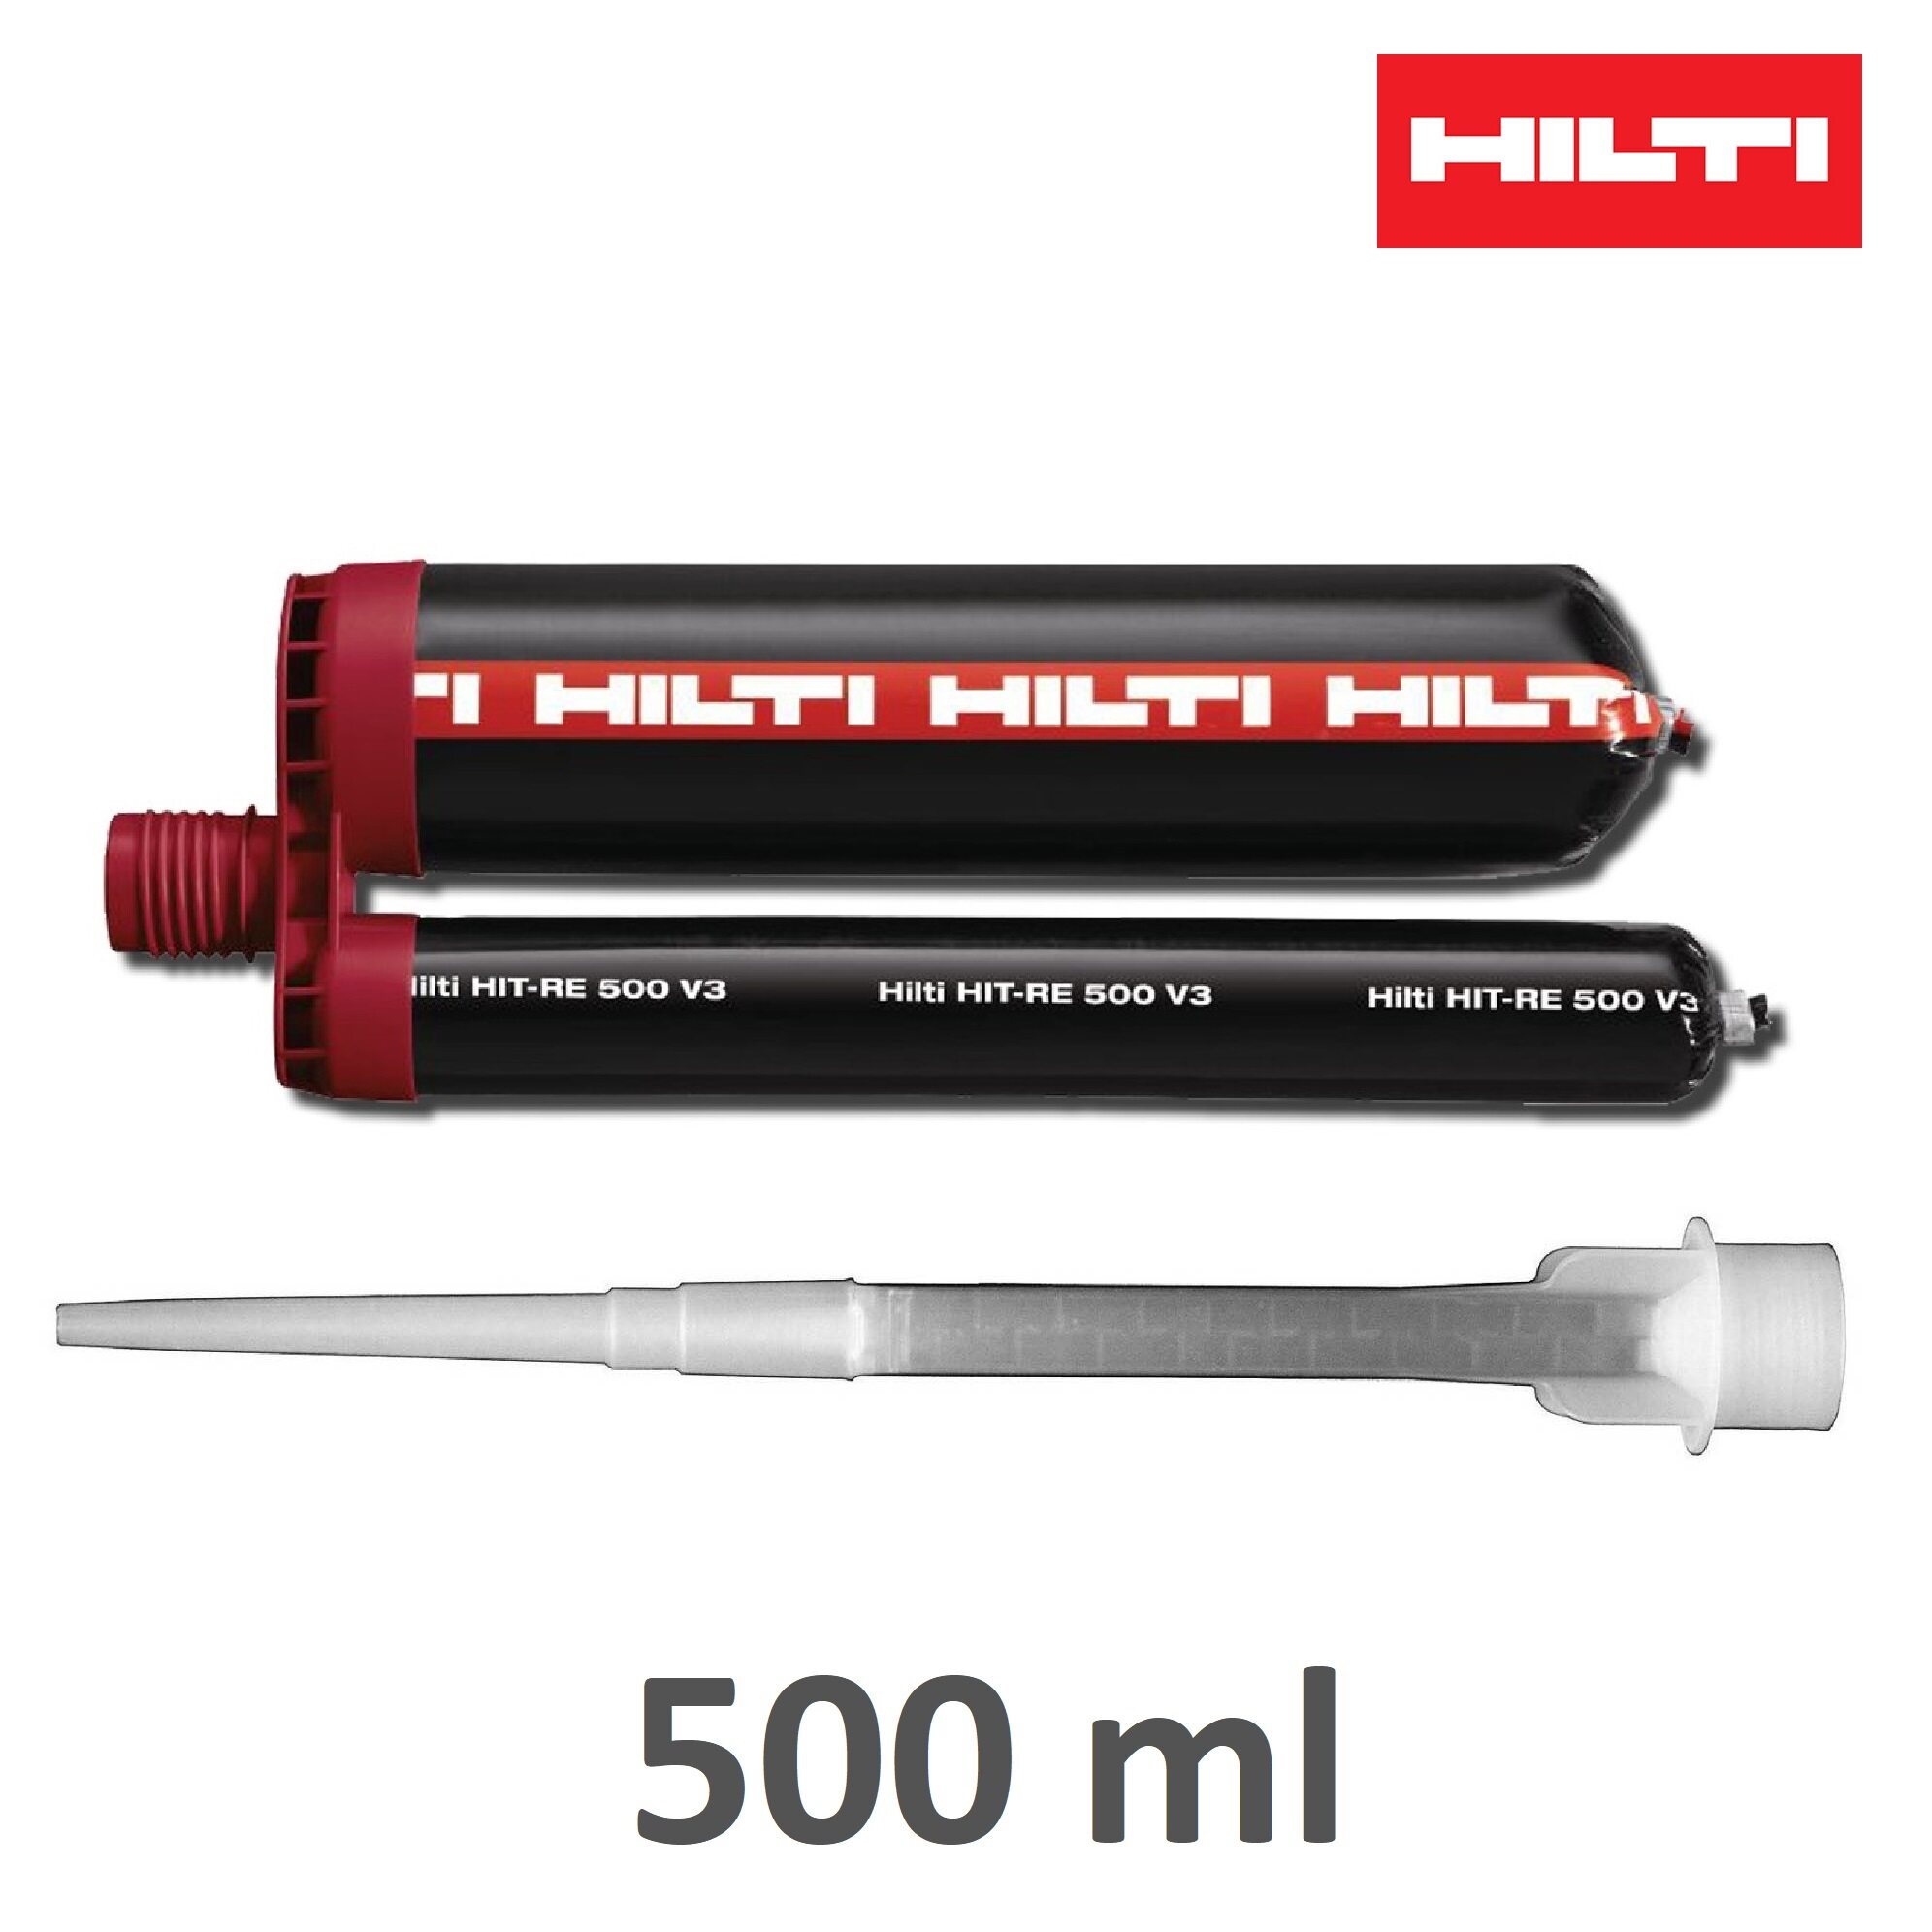 HILTI HIT-RE 500 V3 500ml น้ำยาเสียบเหล็ก เคมีเสียบเหล็ก ขนาด